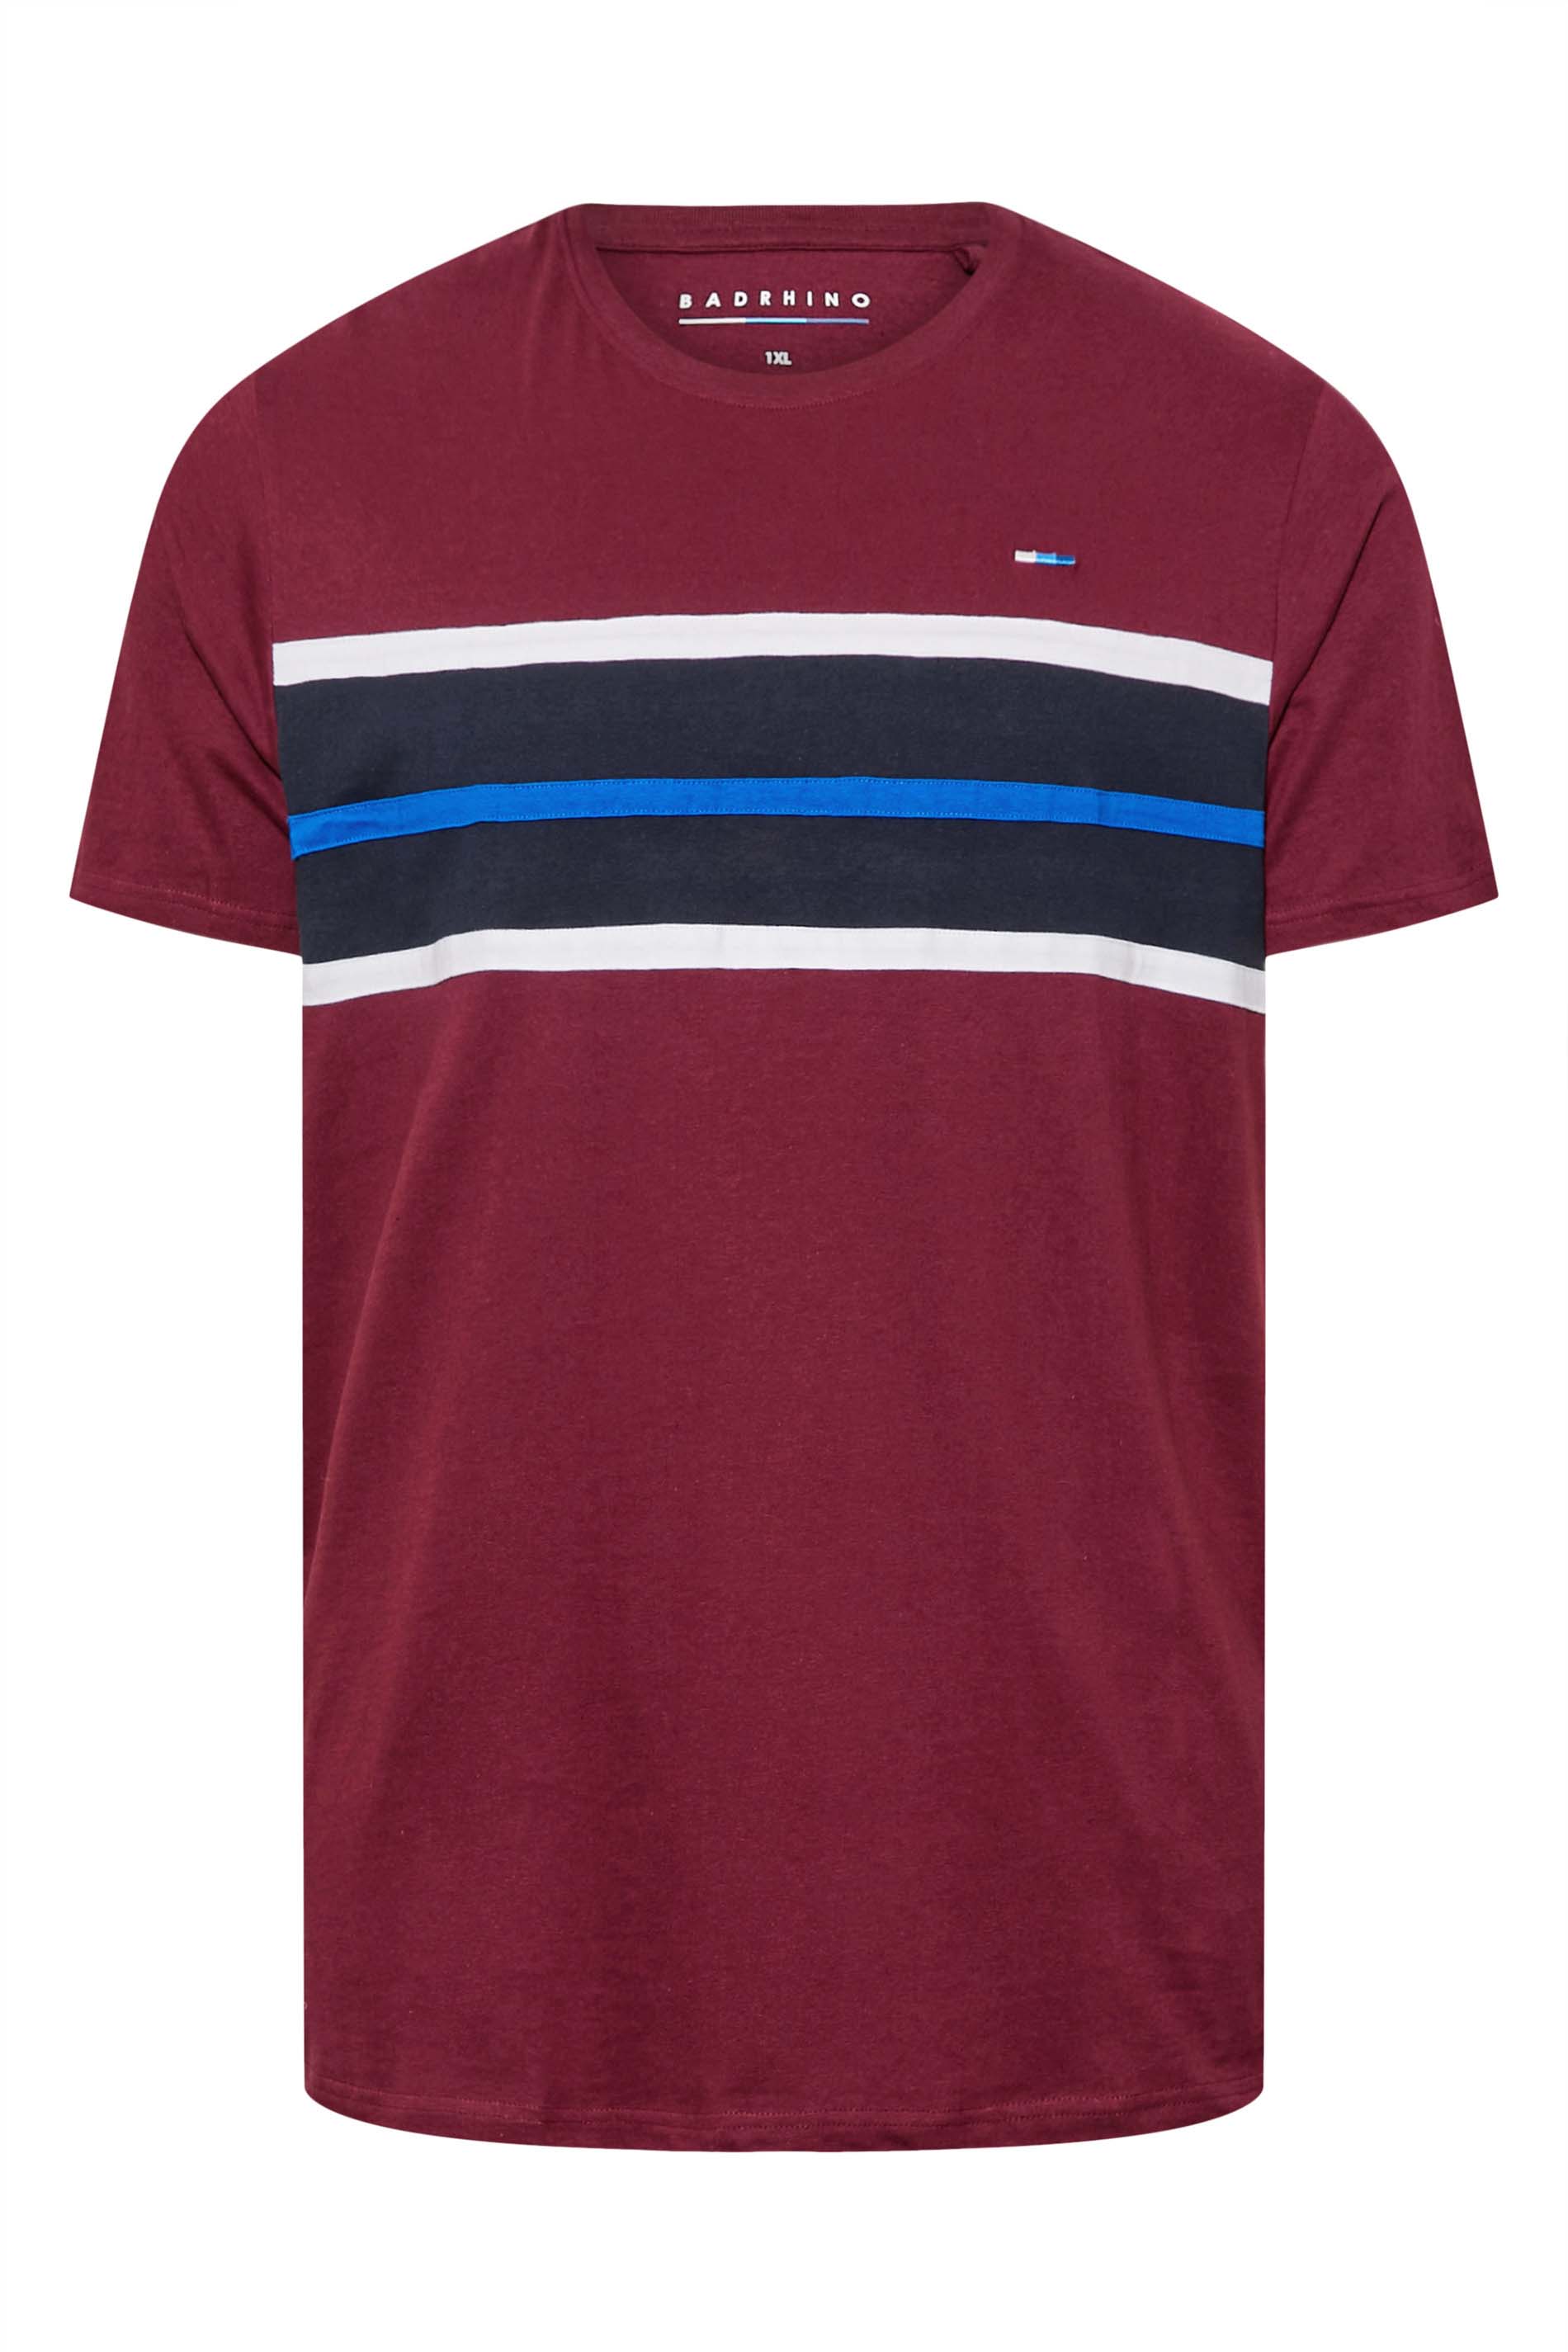 BadRhino Big & Tall Burgundy Red Colour Block Stripe T-Shirt | BadRhino 3